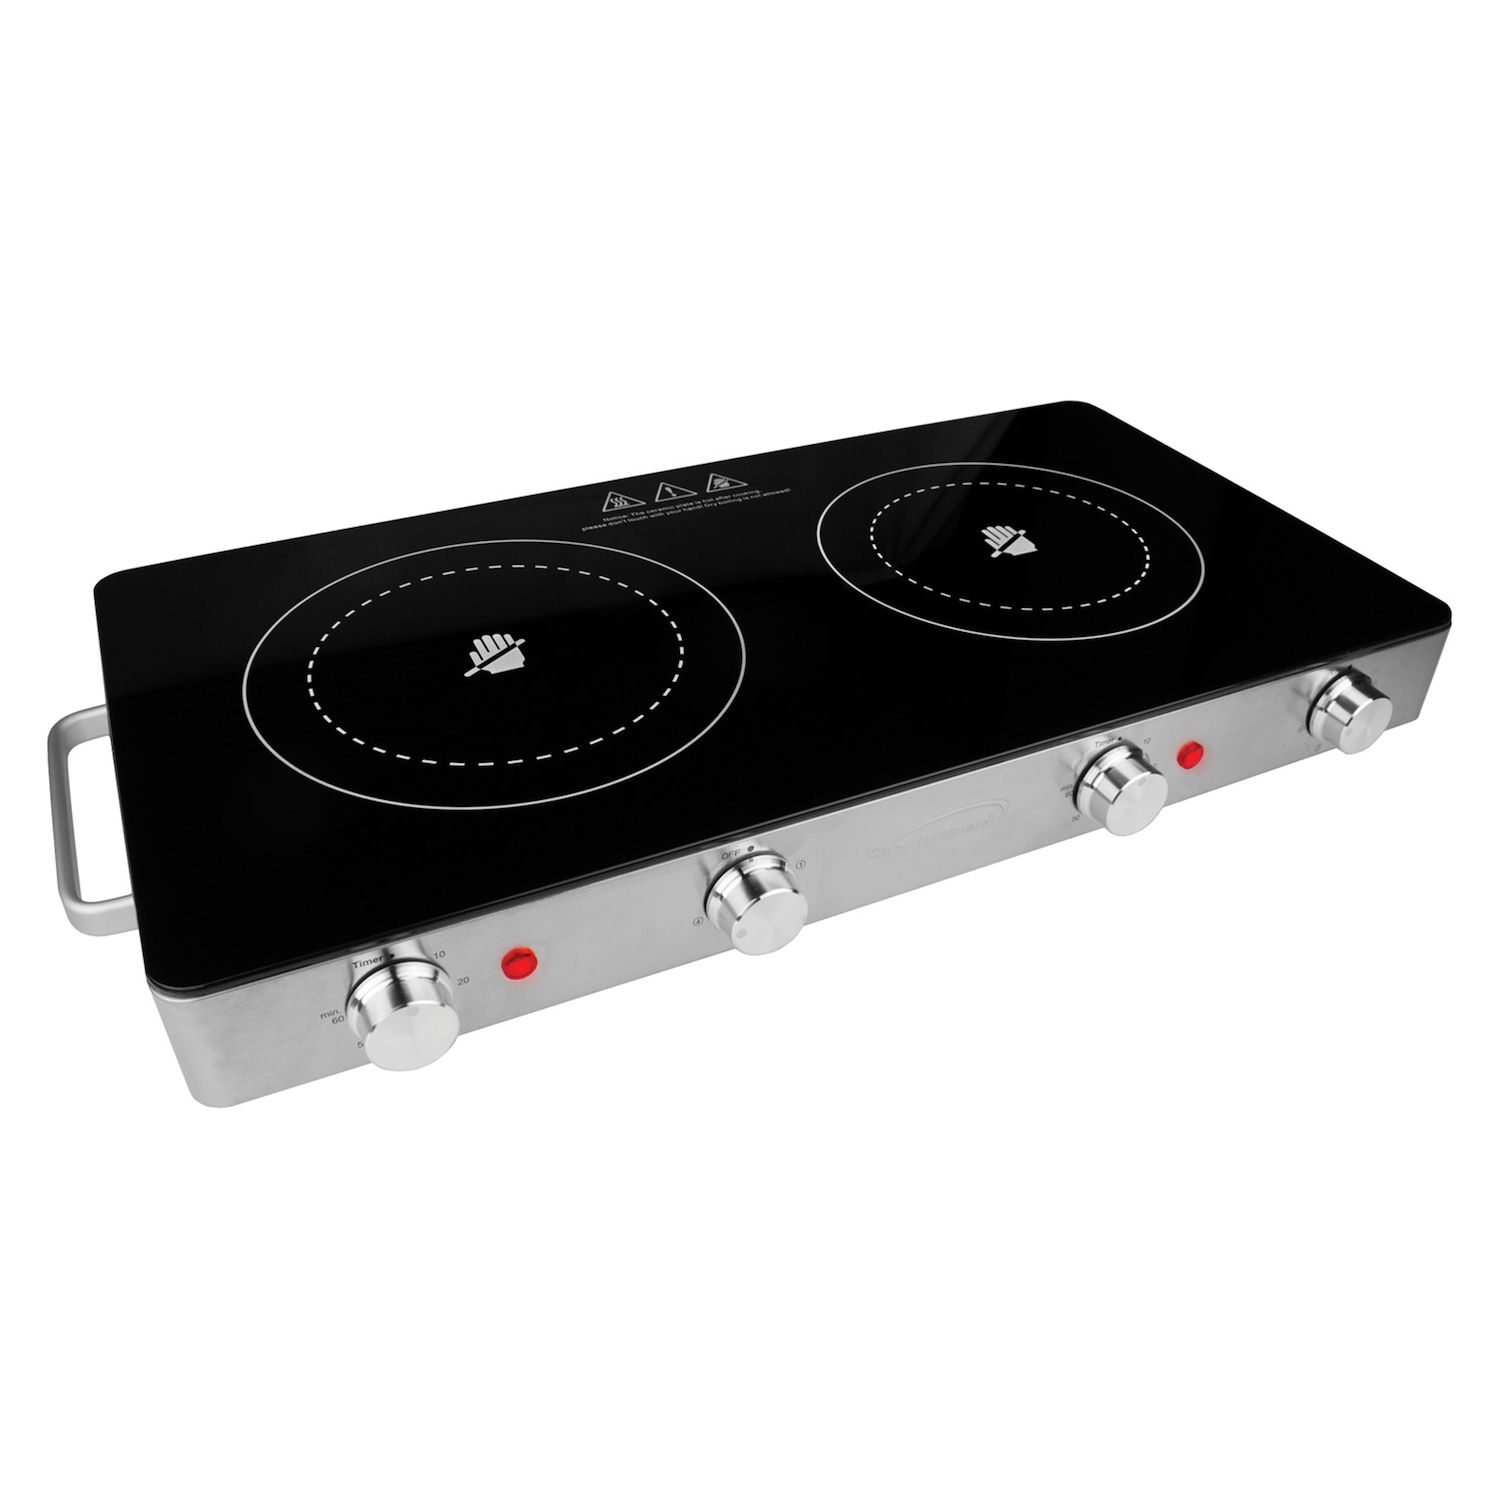 Elite Gourmet Single Burner Electric Cooktop Countertop Hot Plate 1000w New